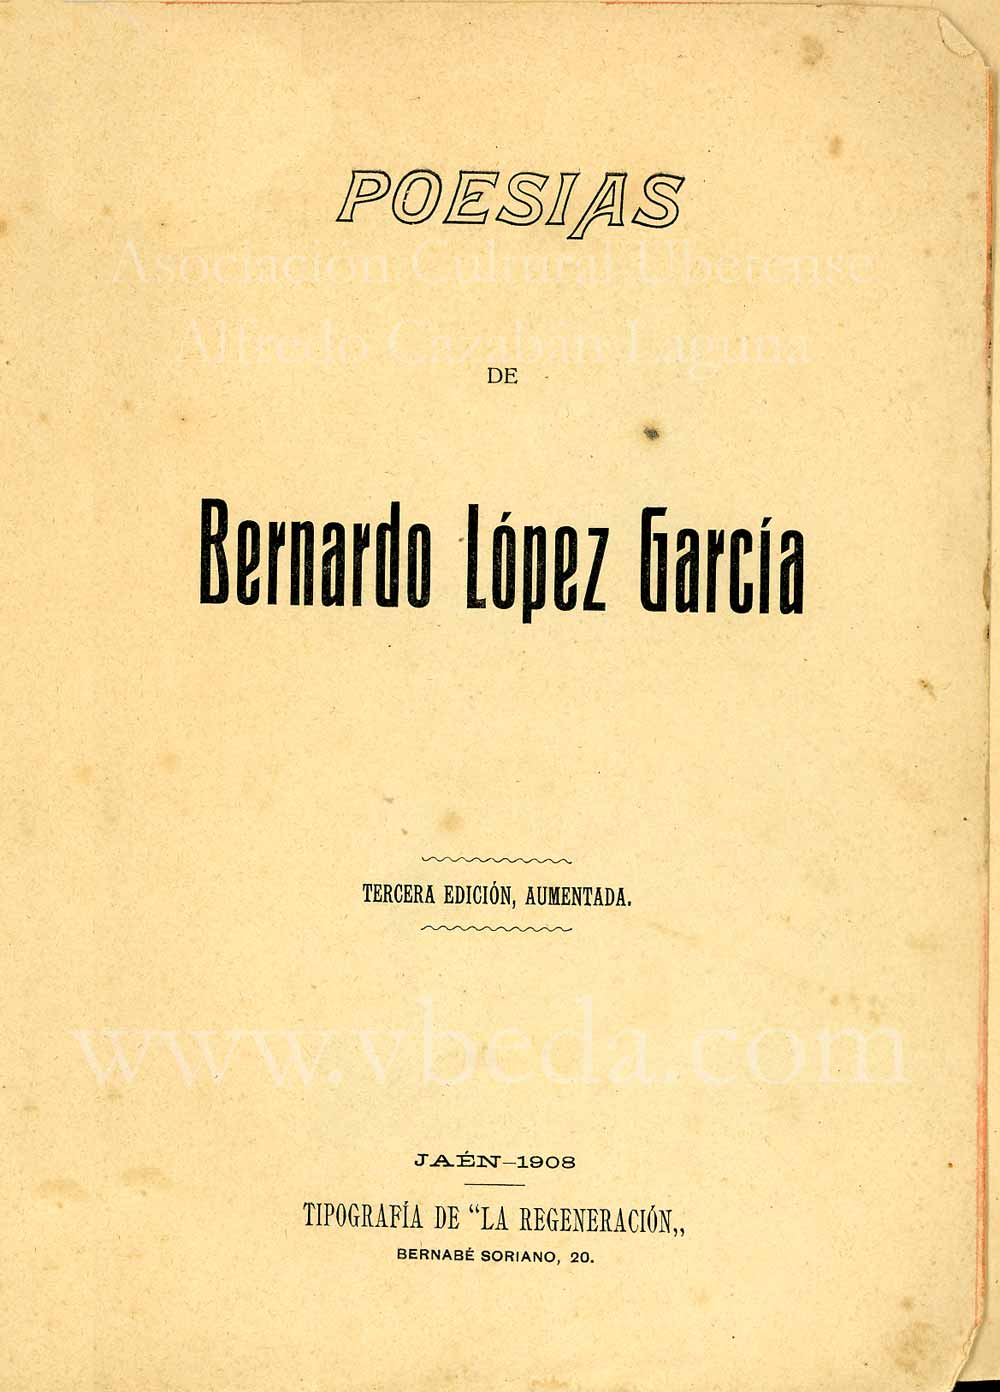 Poes�as de Bernardo L�pez Garc�a